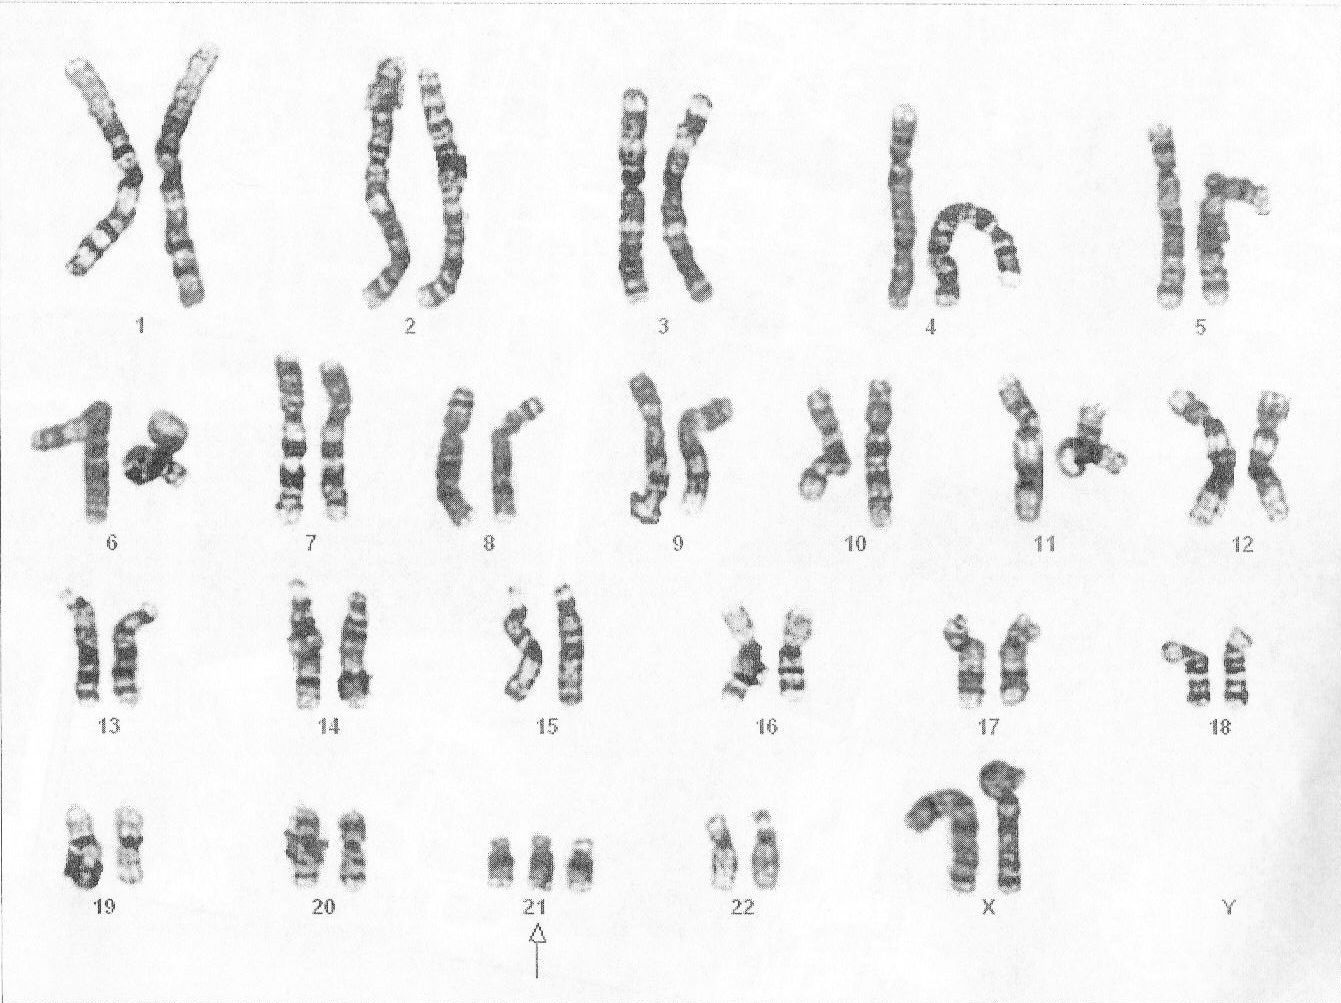 Пересадка хромосом. Синдром Дауна кариотип. Синдром Дауна 21 хромосома. Кариотип человека с синдромом Дауна. Трисомия по 21 хромосоме кариотип.